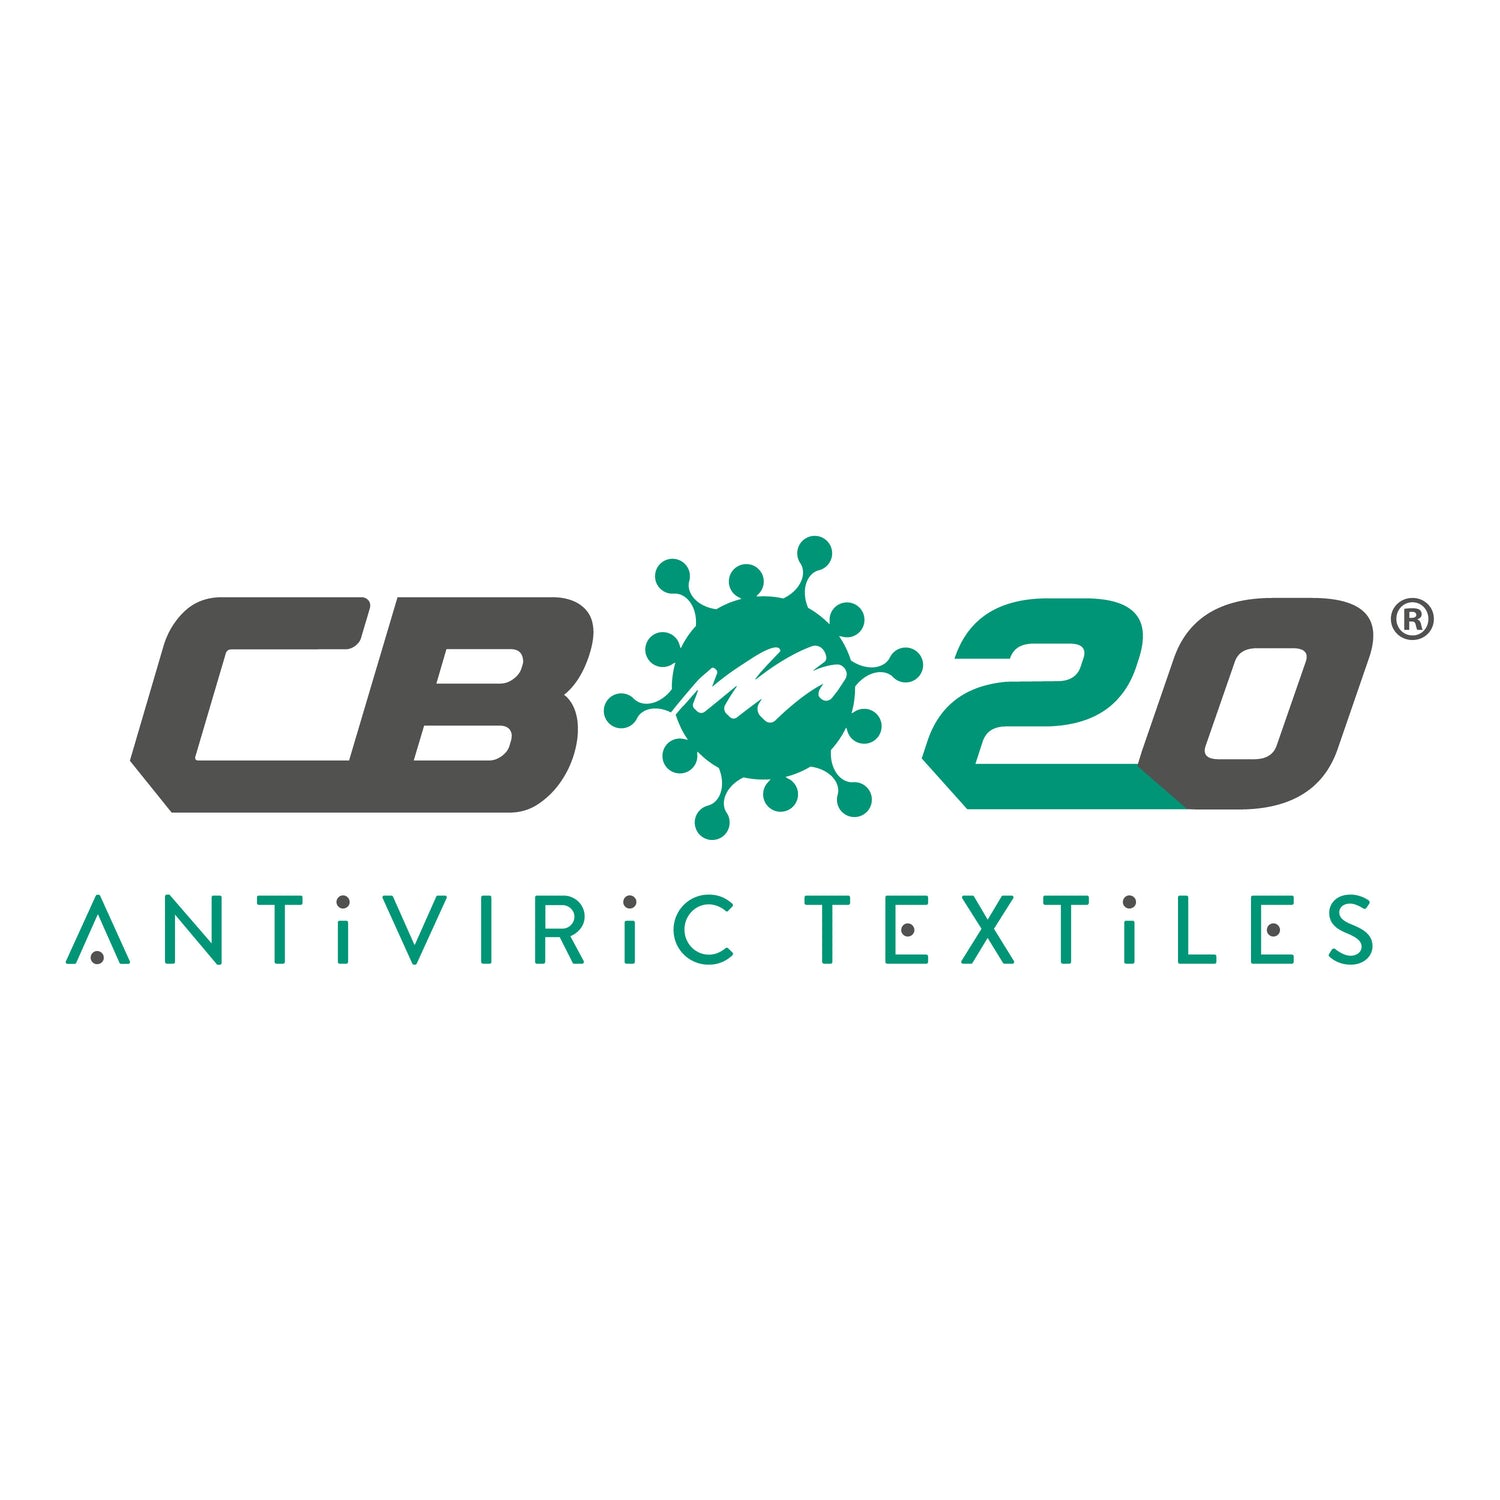 CB-20 Antiviric Textiles